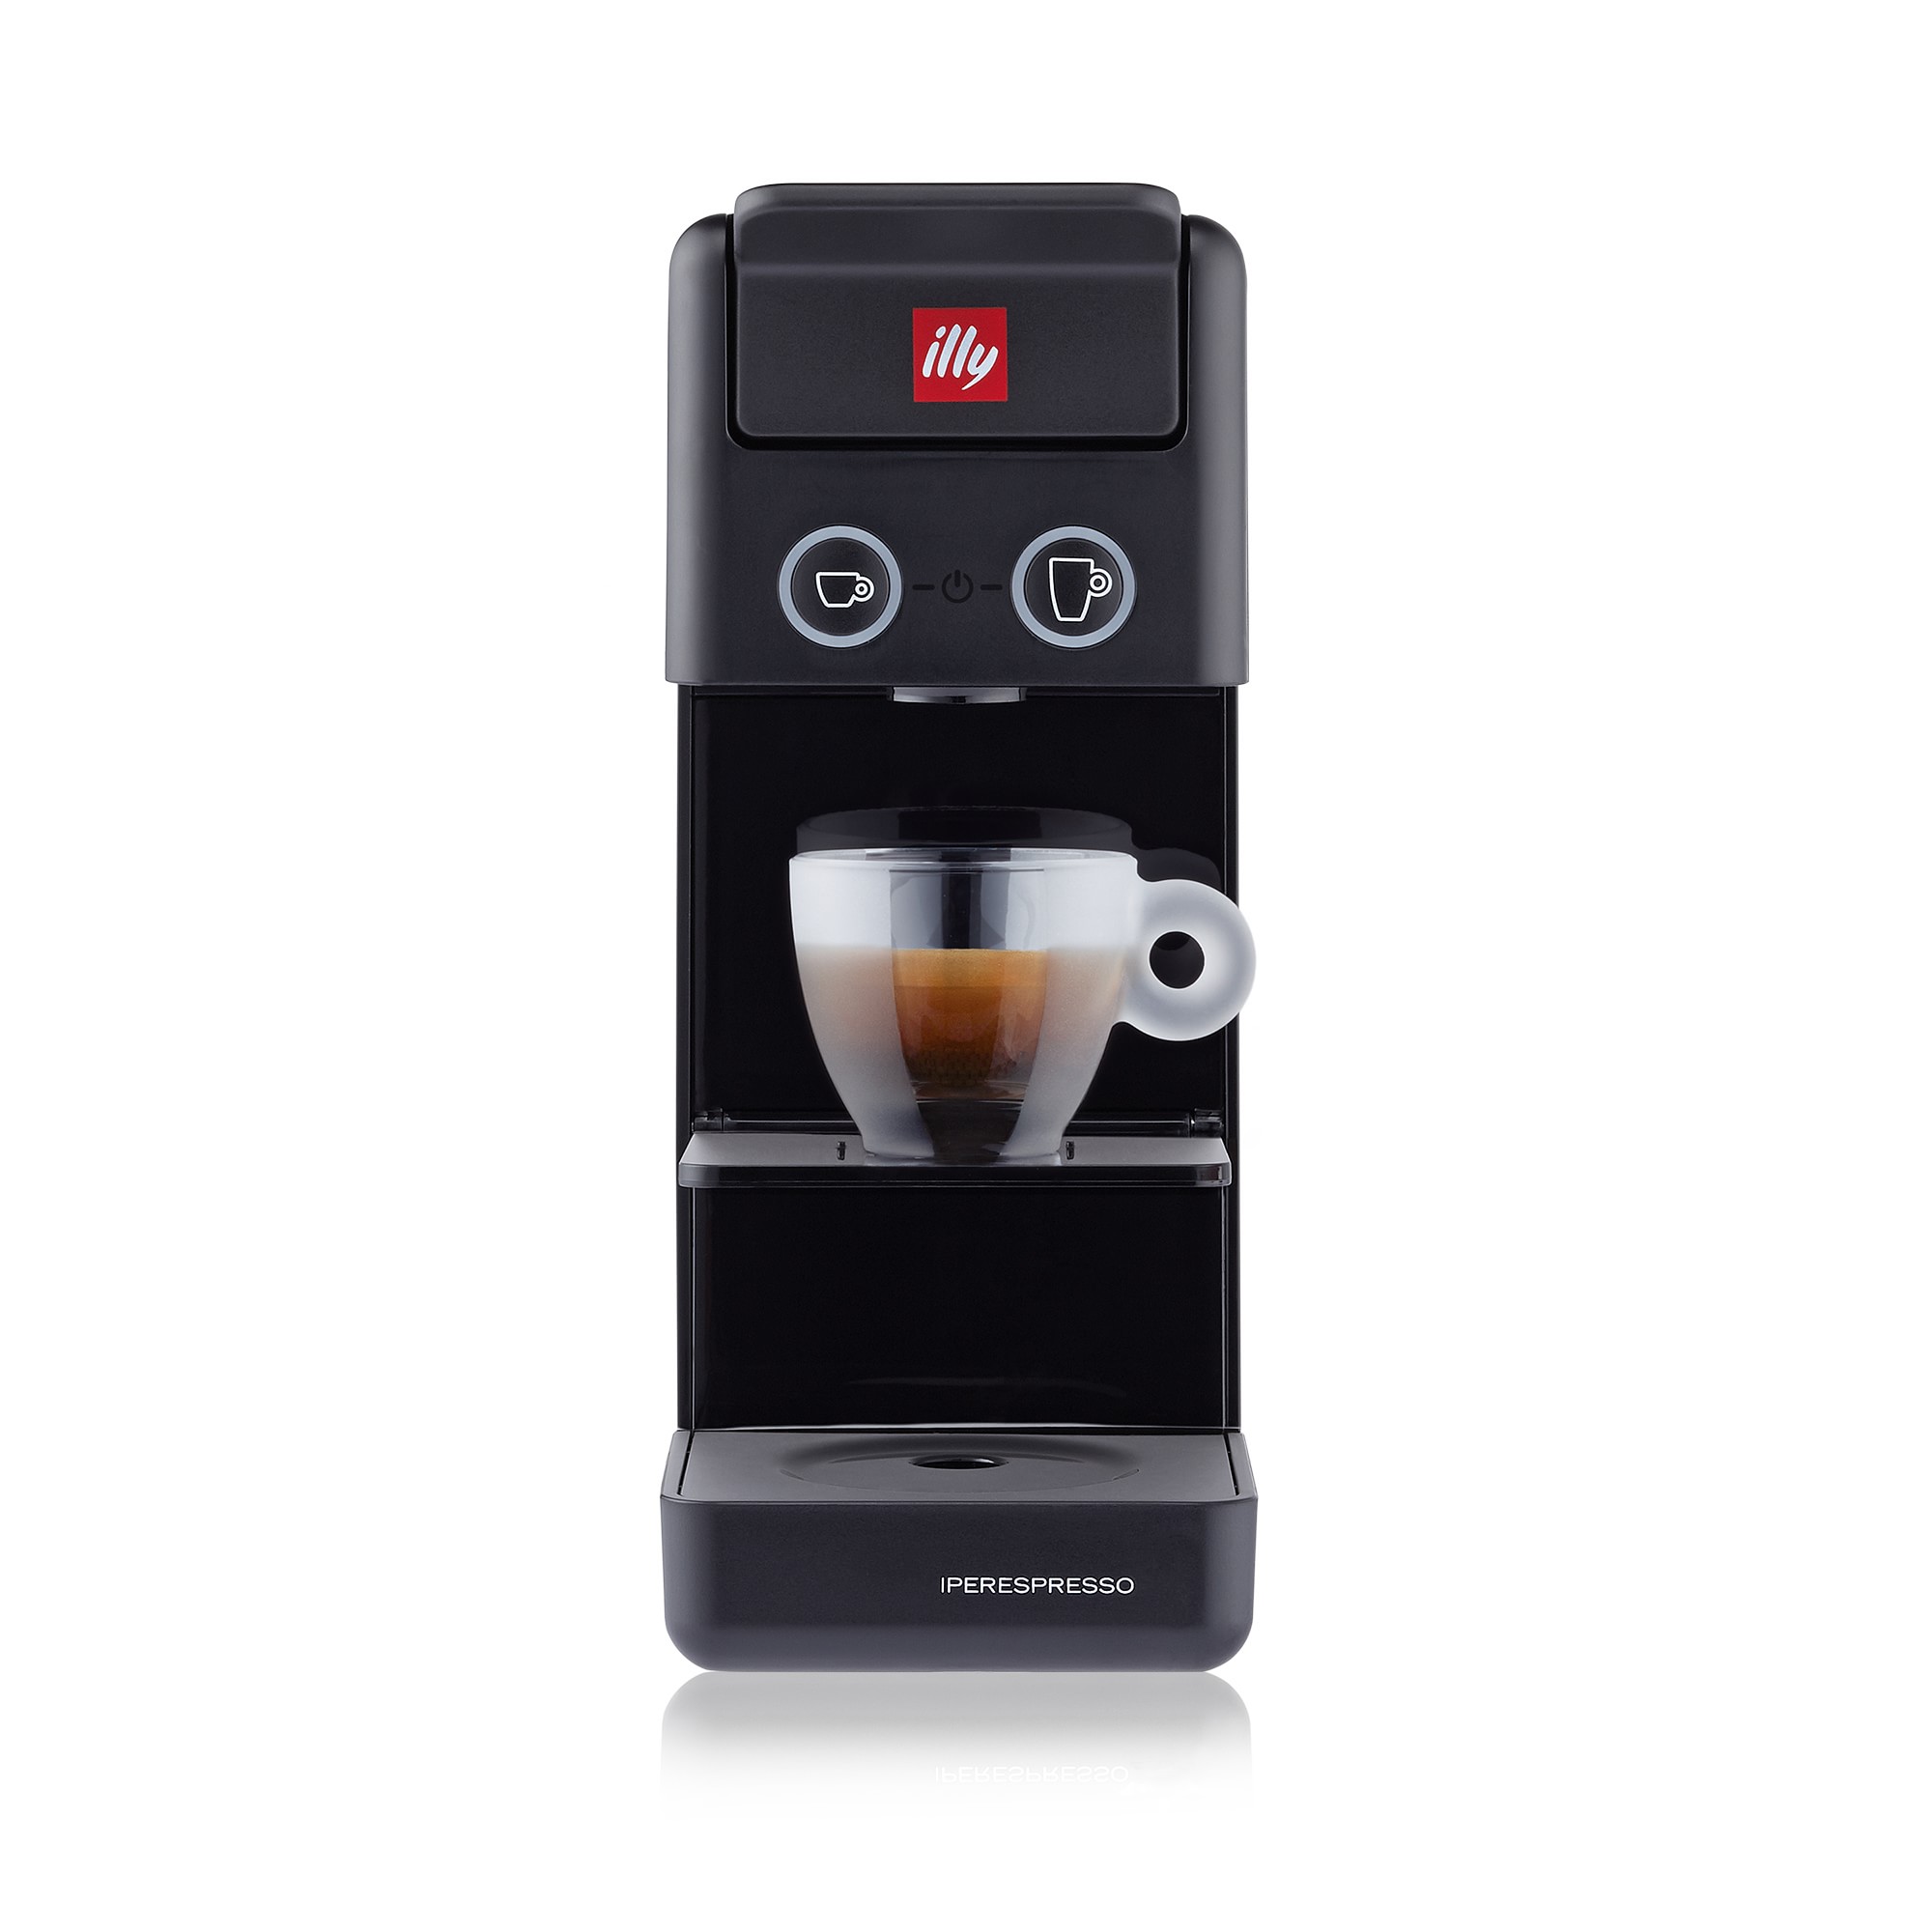 Illy Y3.3 Espresso Machine